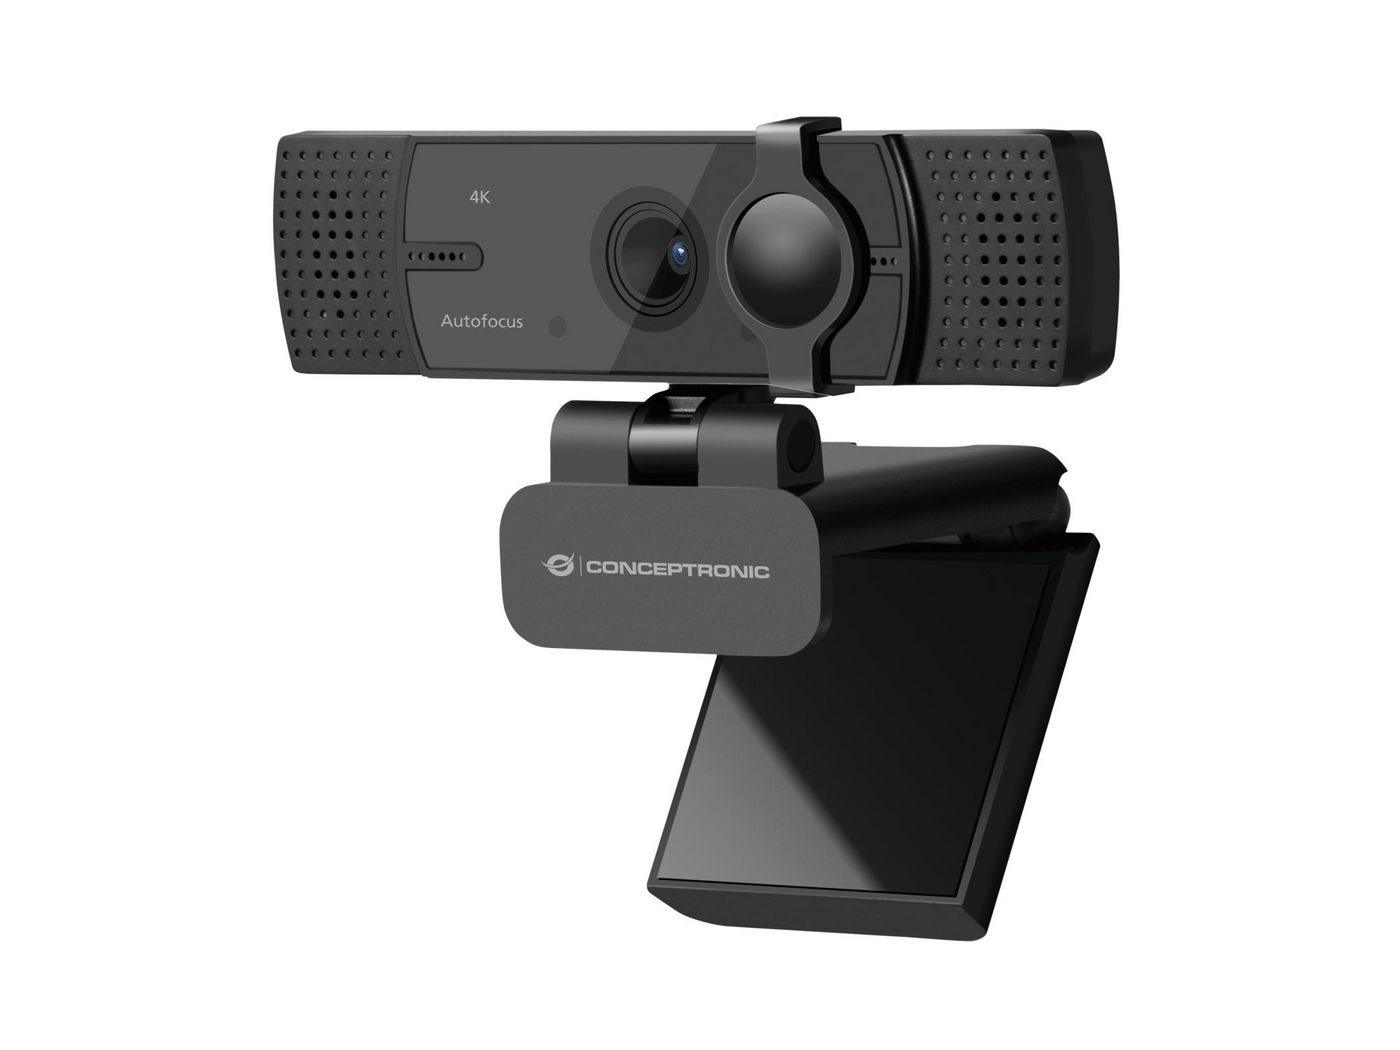 CONCEPTRONIC AMDIS07B 8.3MP 4K Autofocus Webcam USB2.0